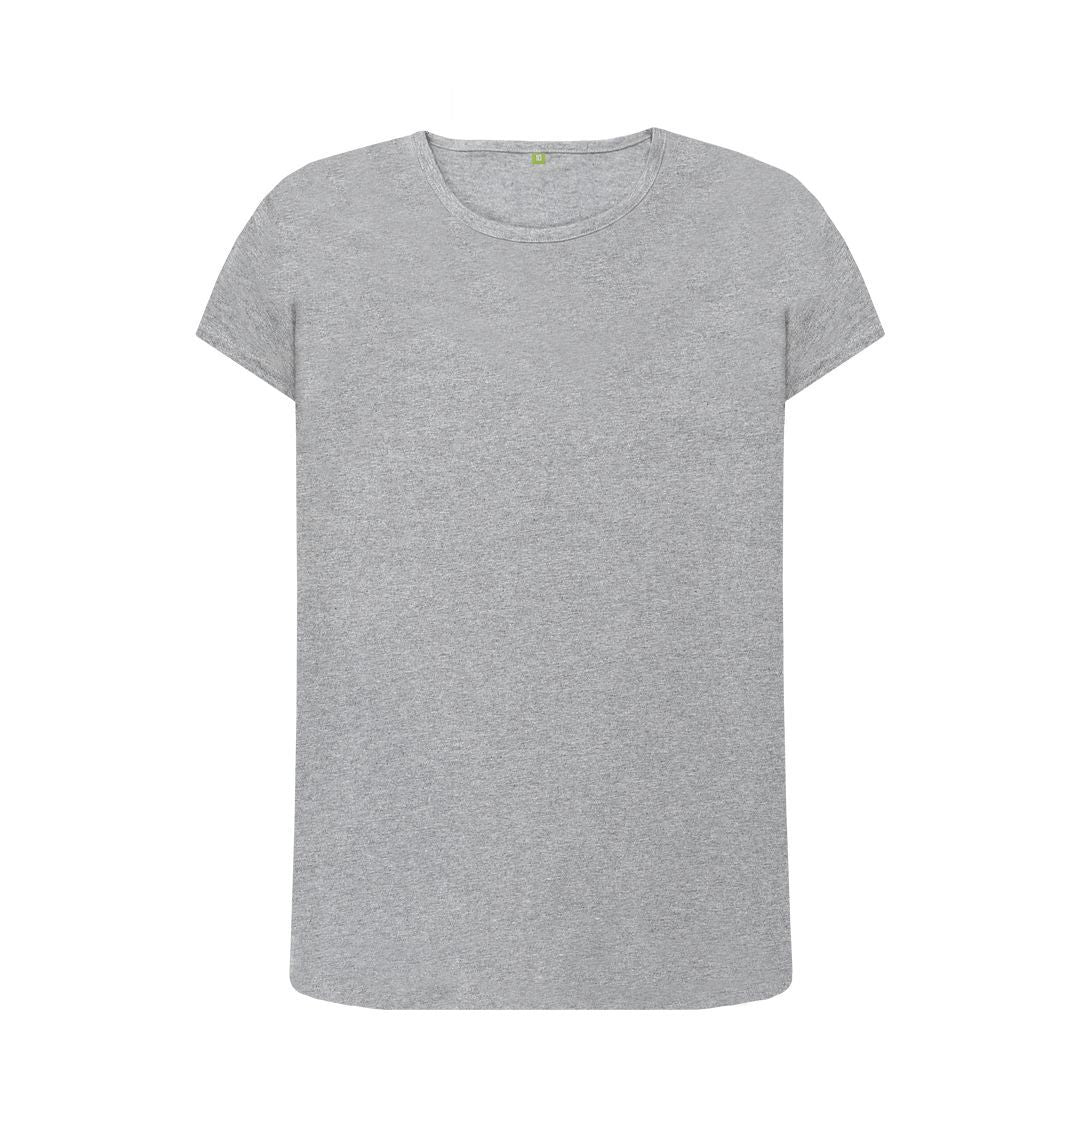 Athletic Grey Women's organic cotton crew neck t-shirt